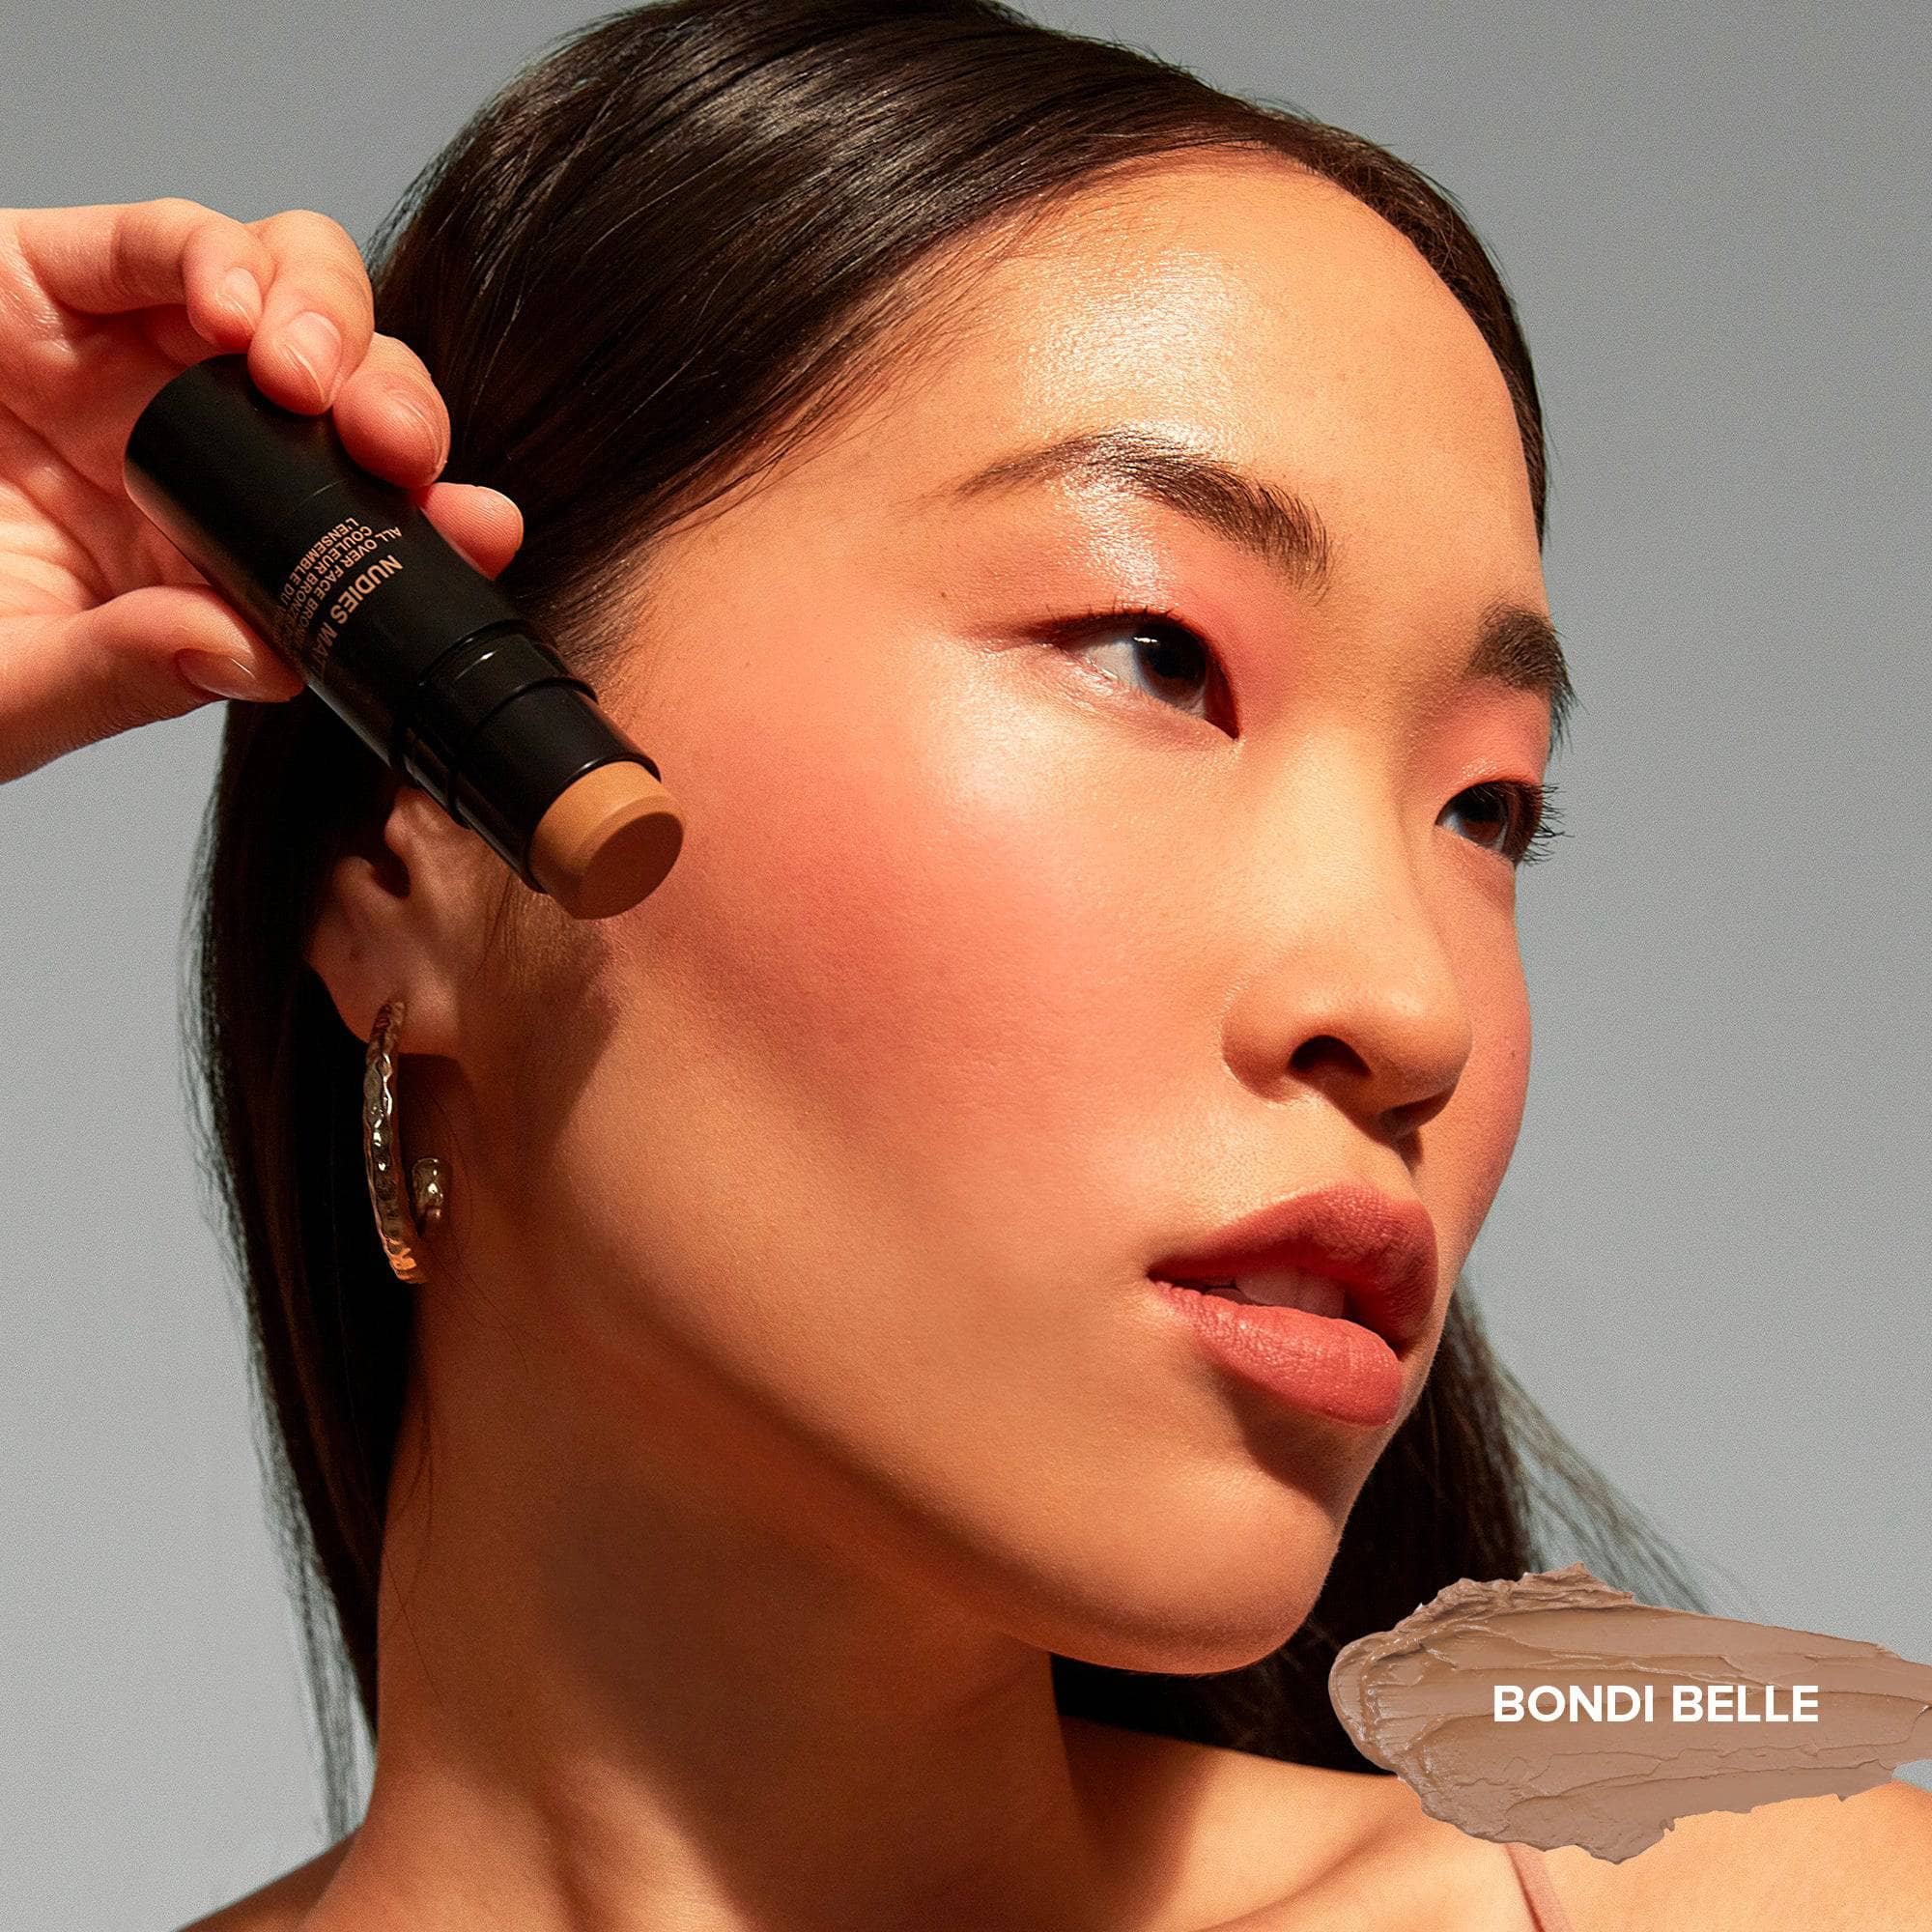 Asian young woman wearing Nudies Blush Stick in shade Bondi Belle